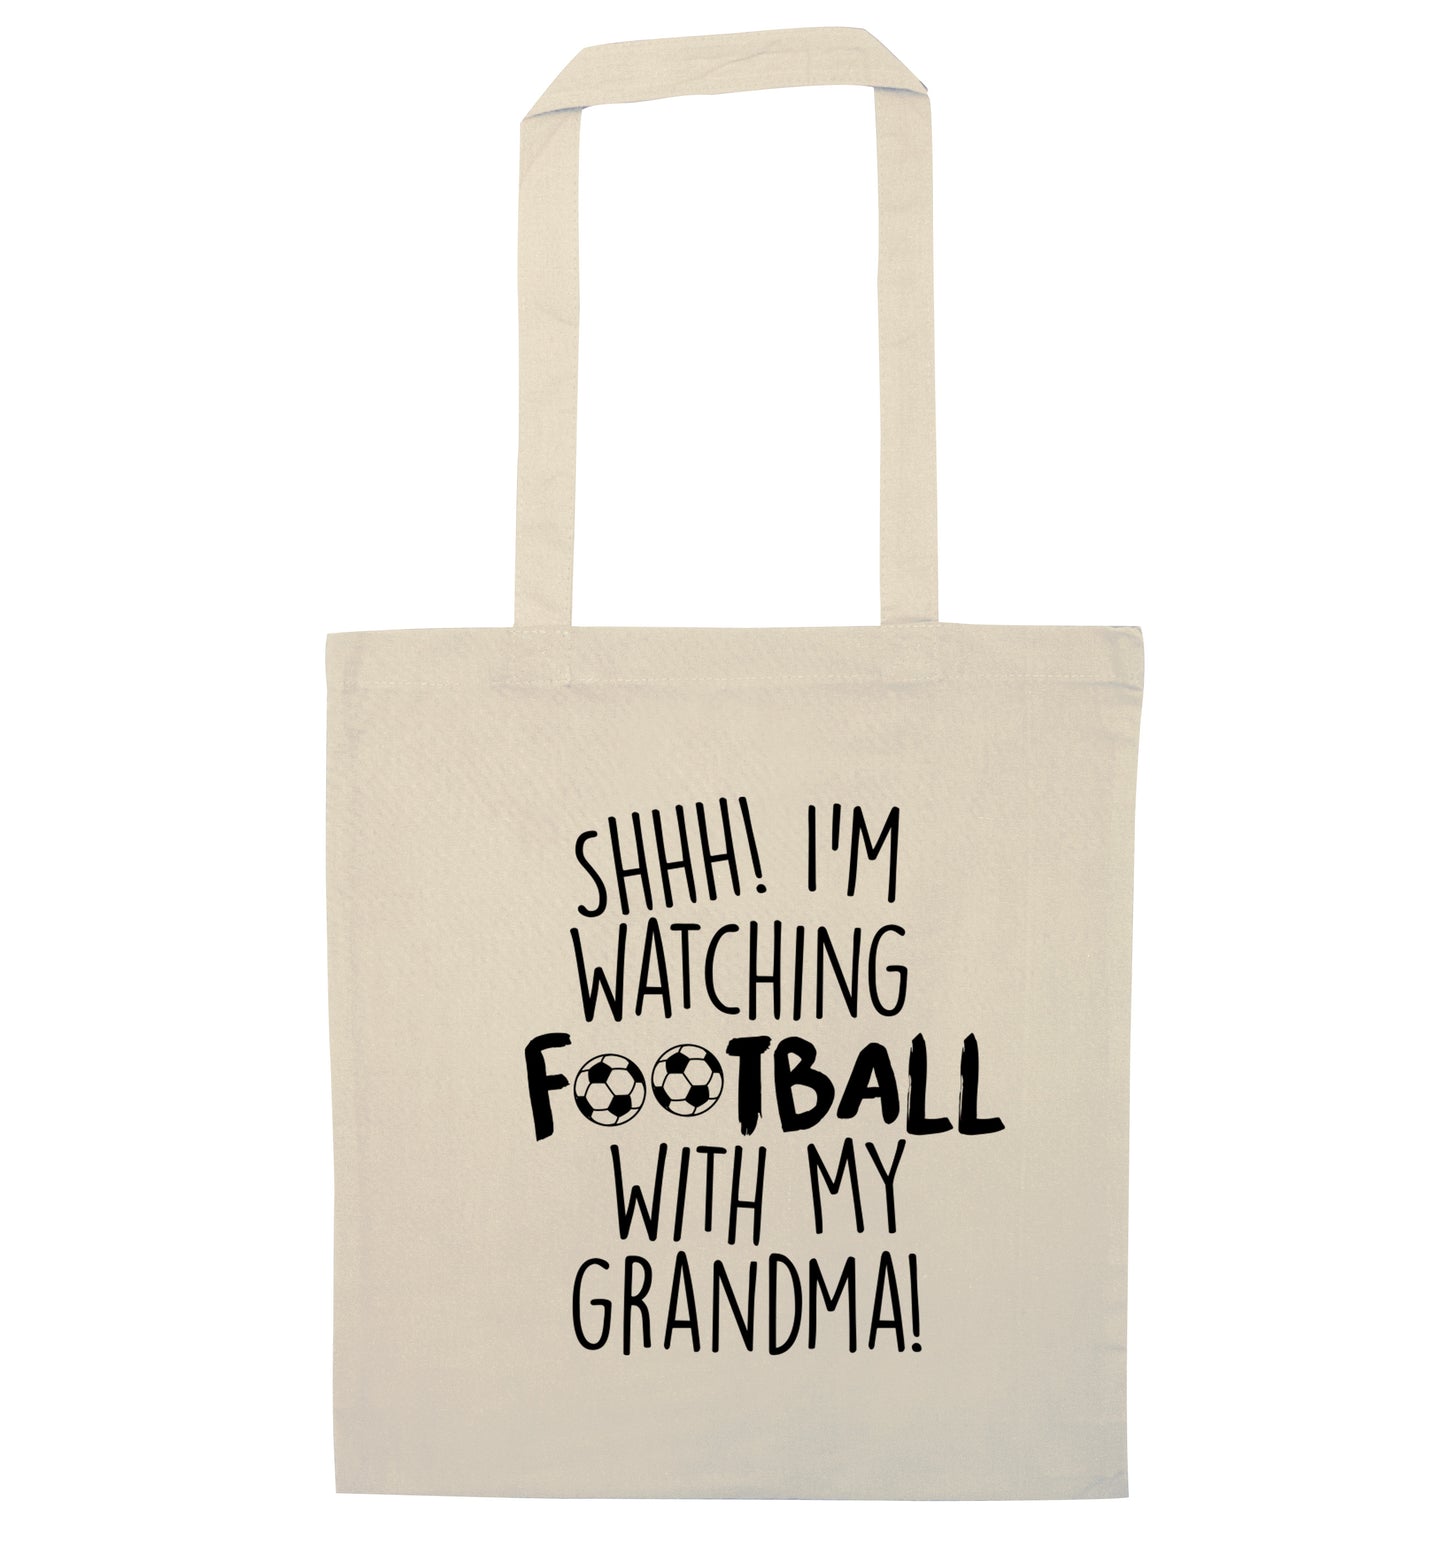 Shhh I'm watching football with my grandma natural tote bag